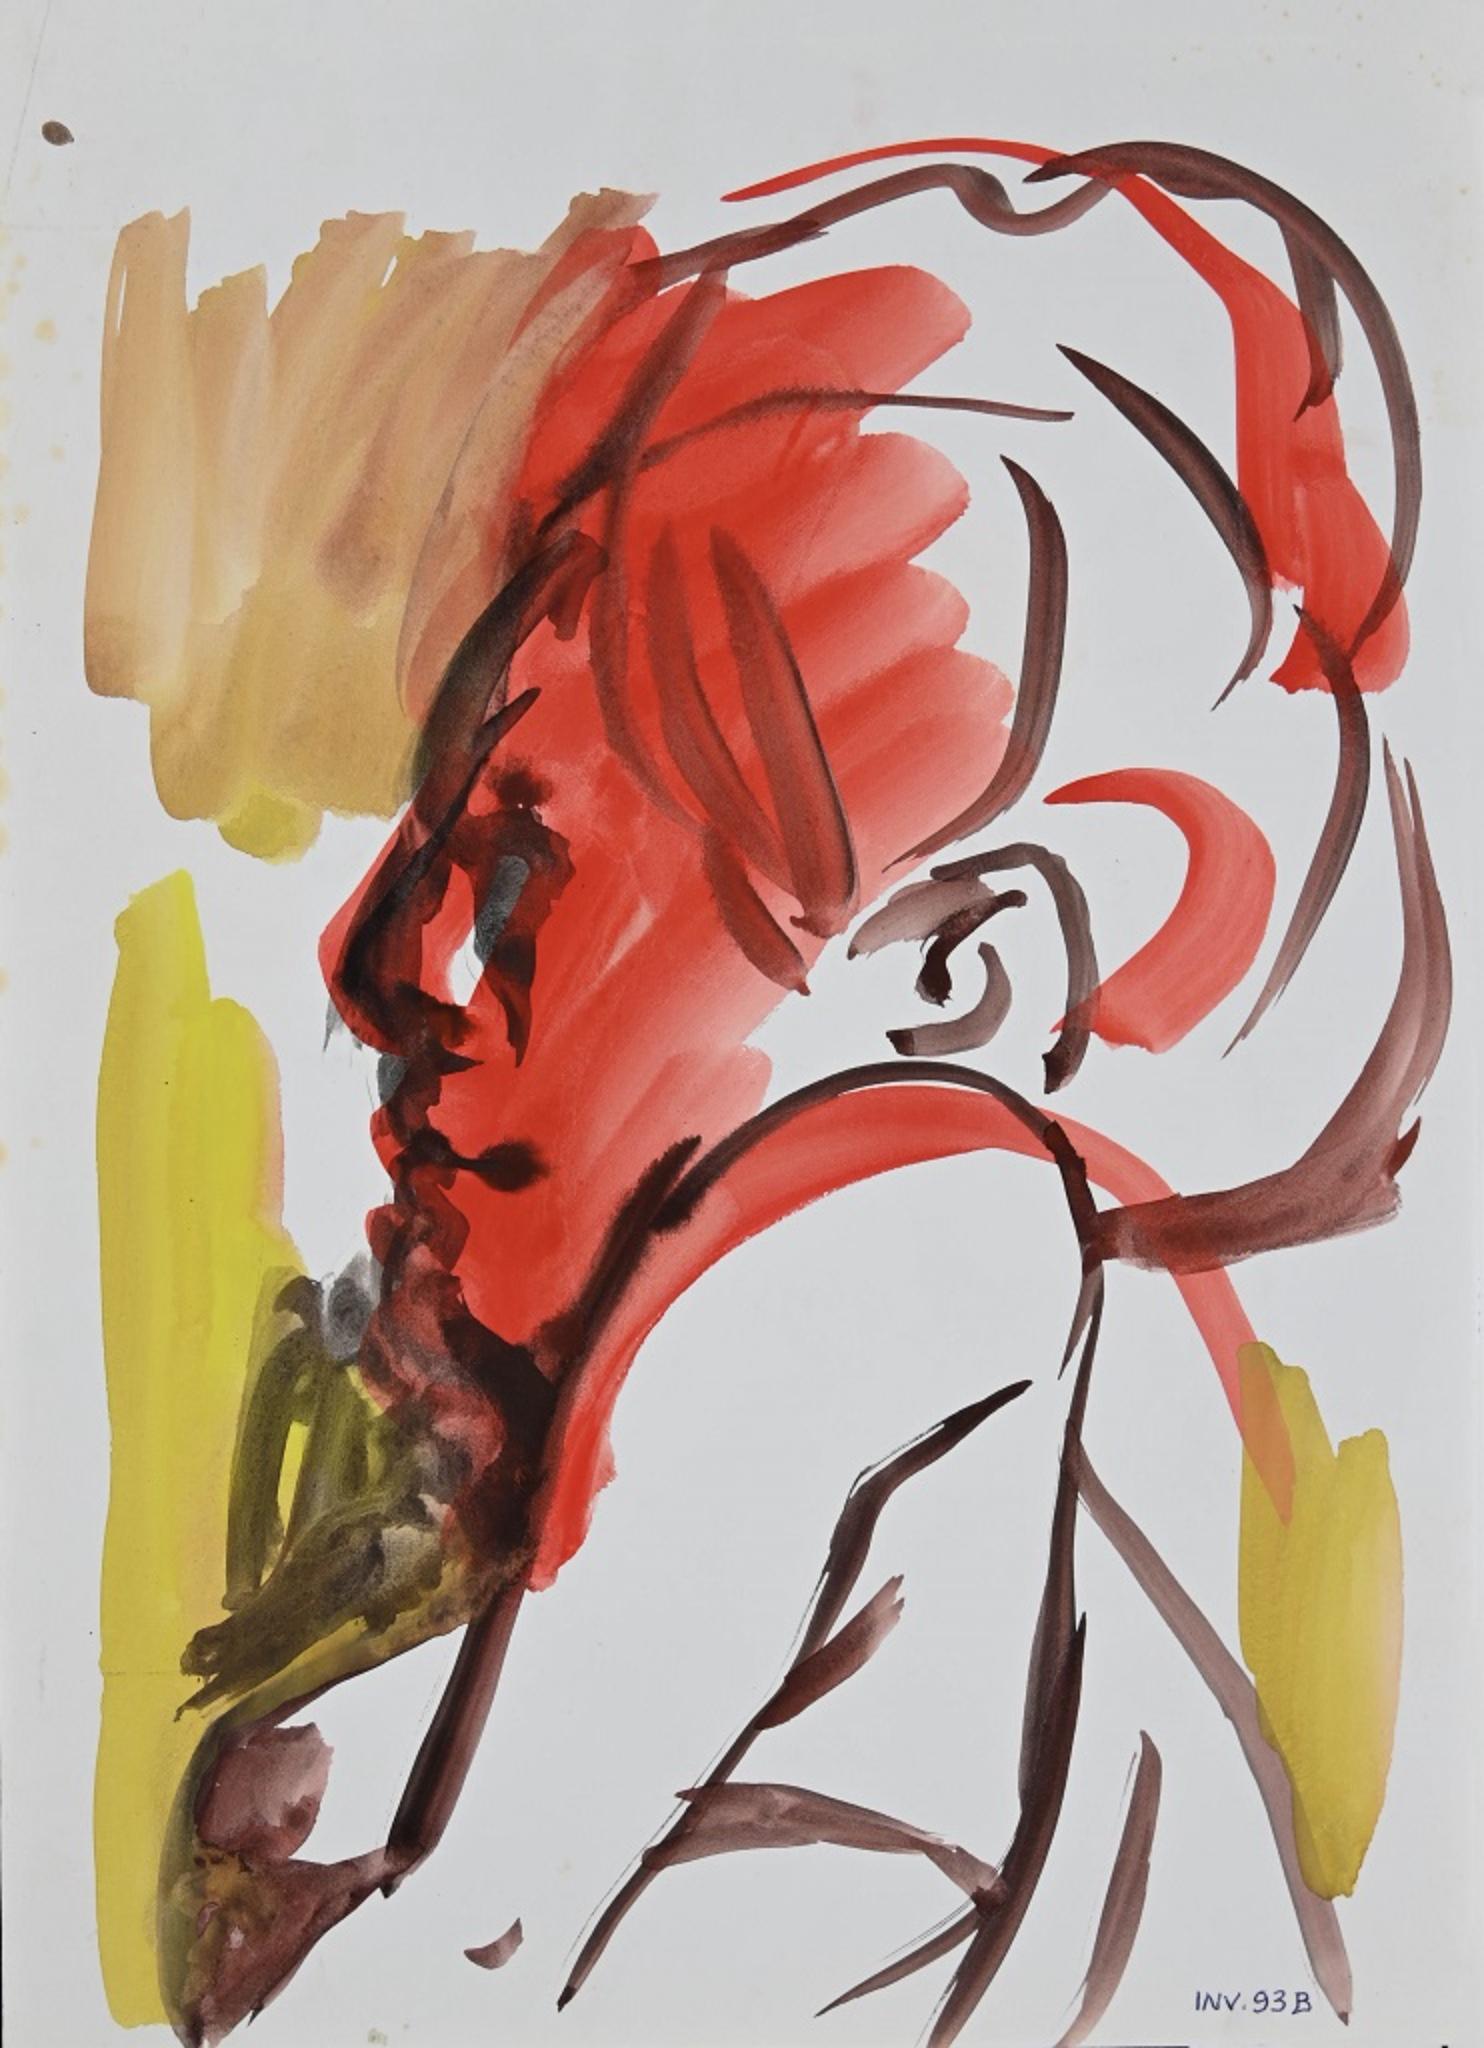 Rotes Profil einer Frau – Aquarell auf Papier – 1970er Jahre